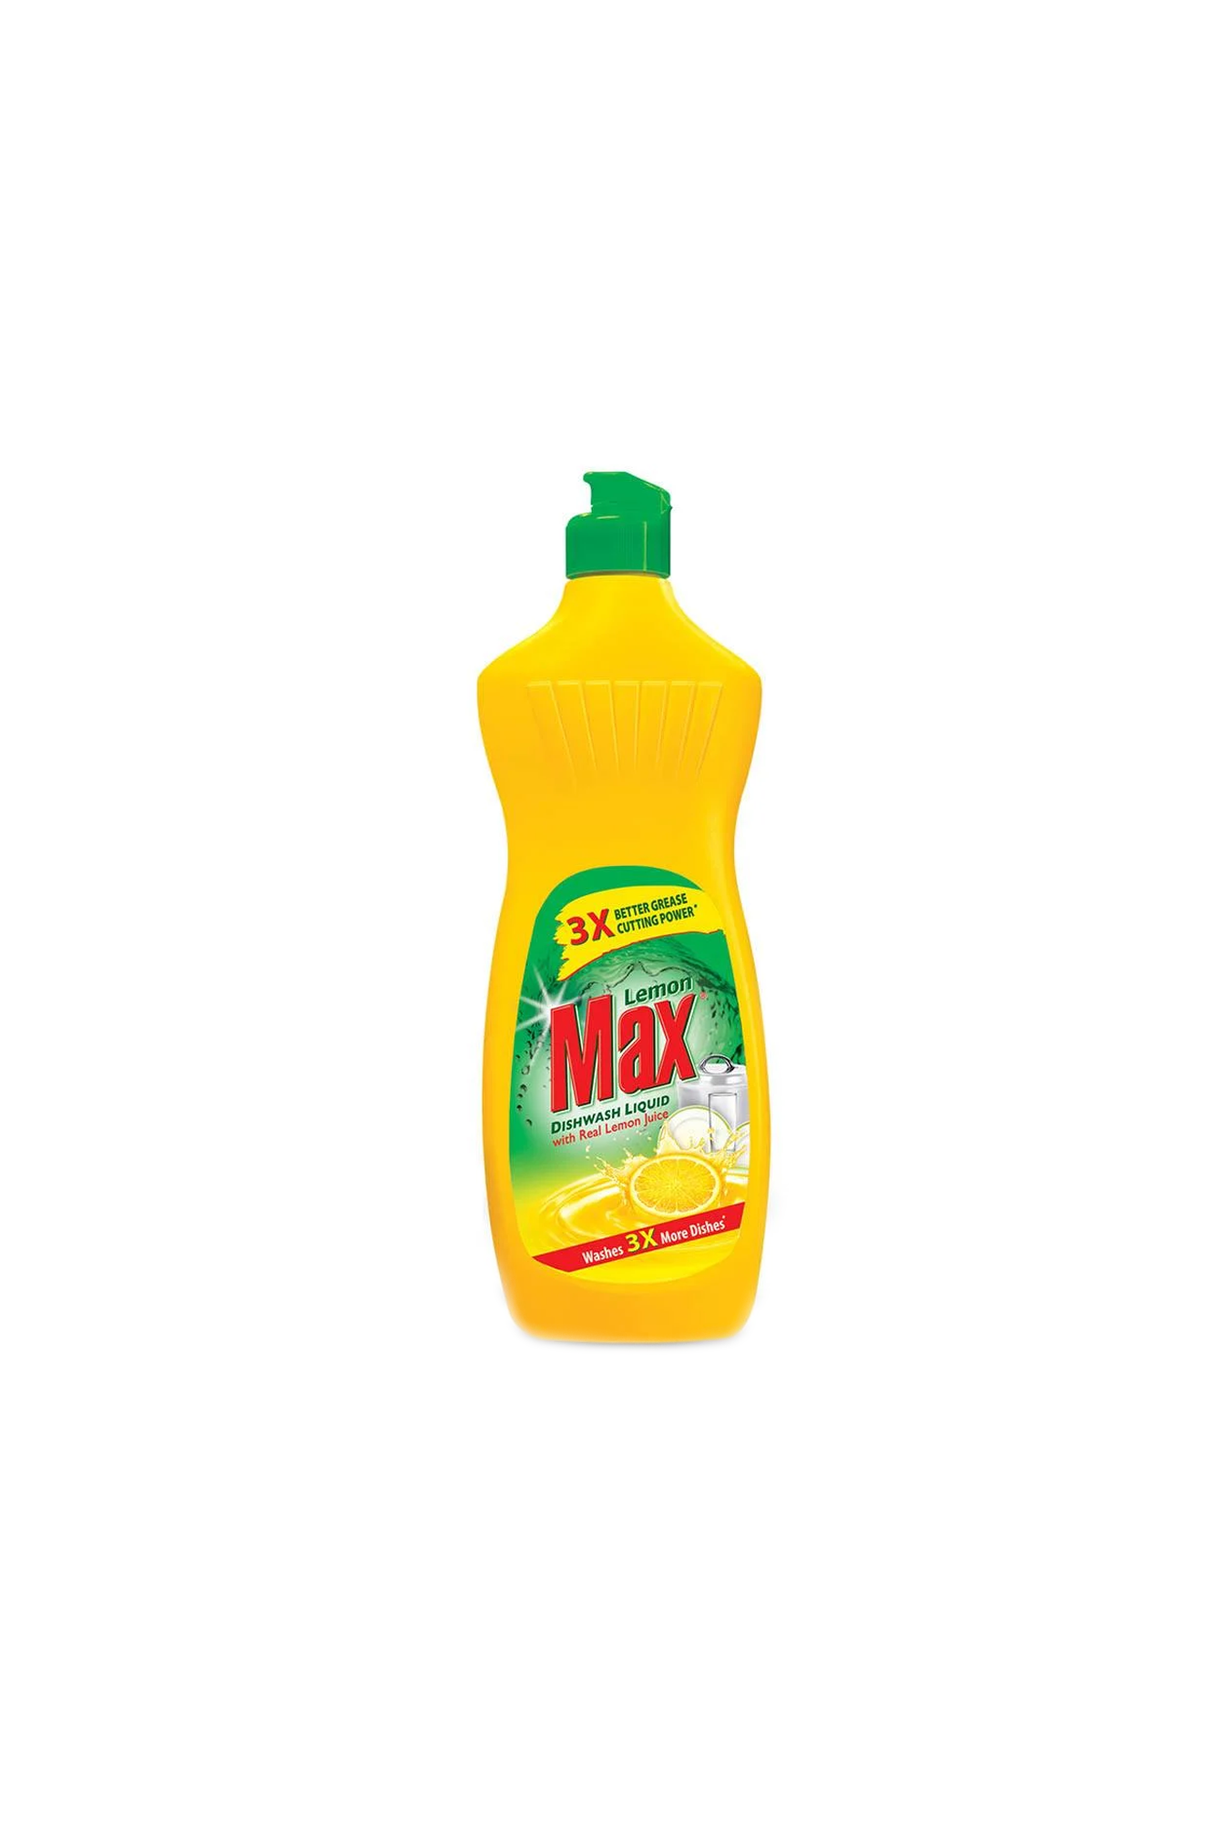 lemon max dishwash liquid lemon 750ml yellow bottle